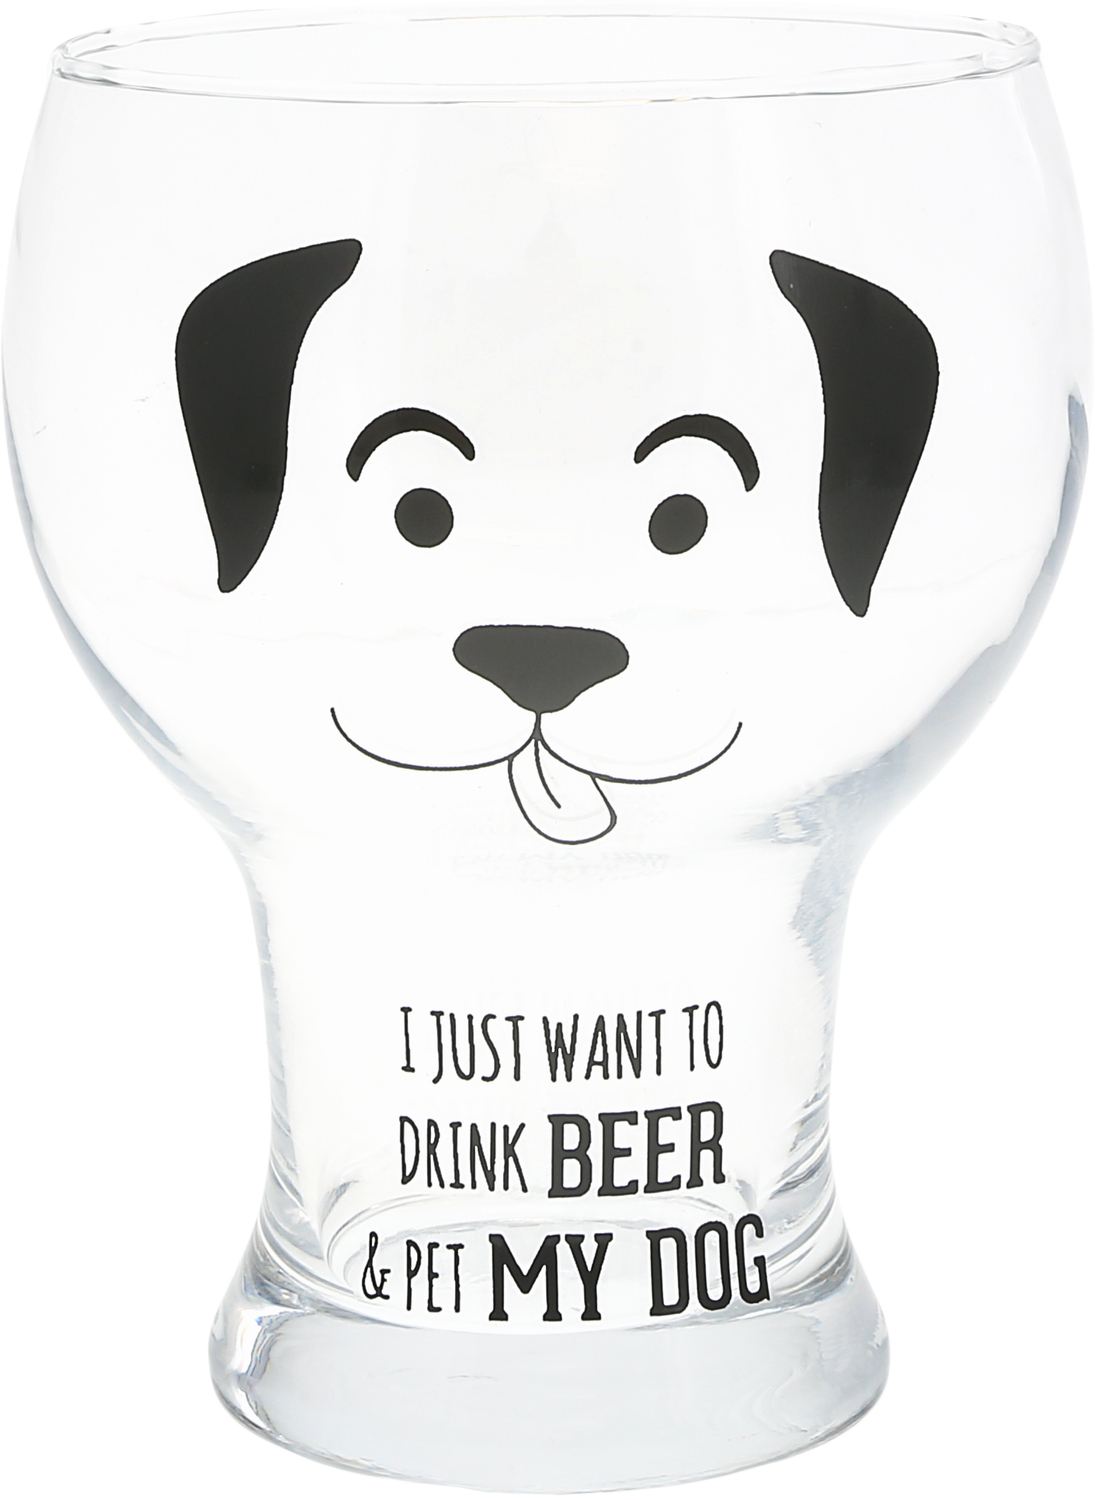 My Dog by We Pets - My Dog - 15 oz Pilsner Glass